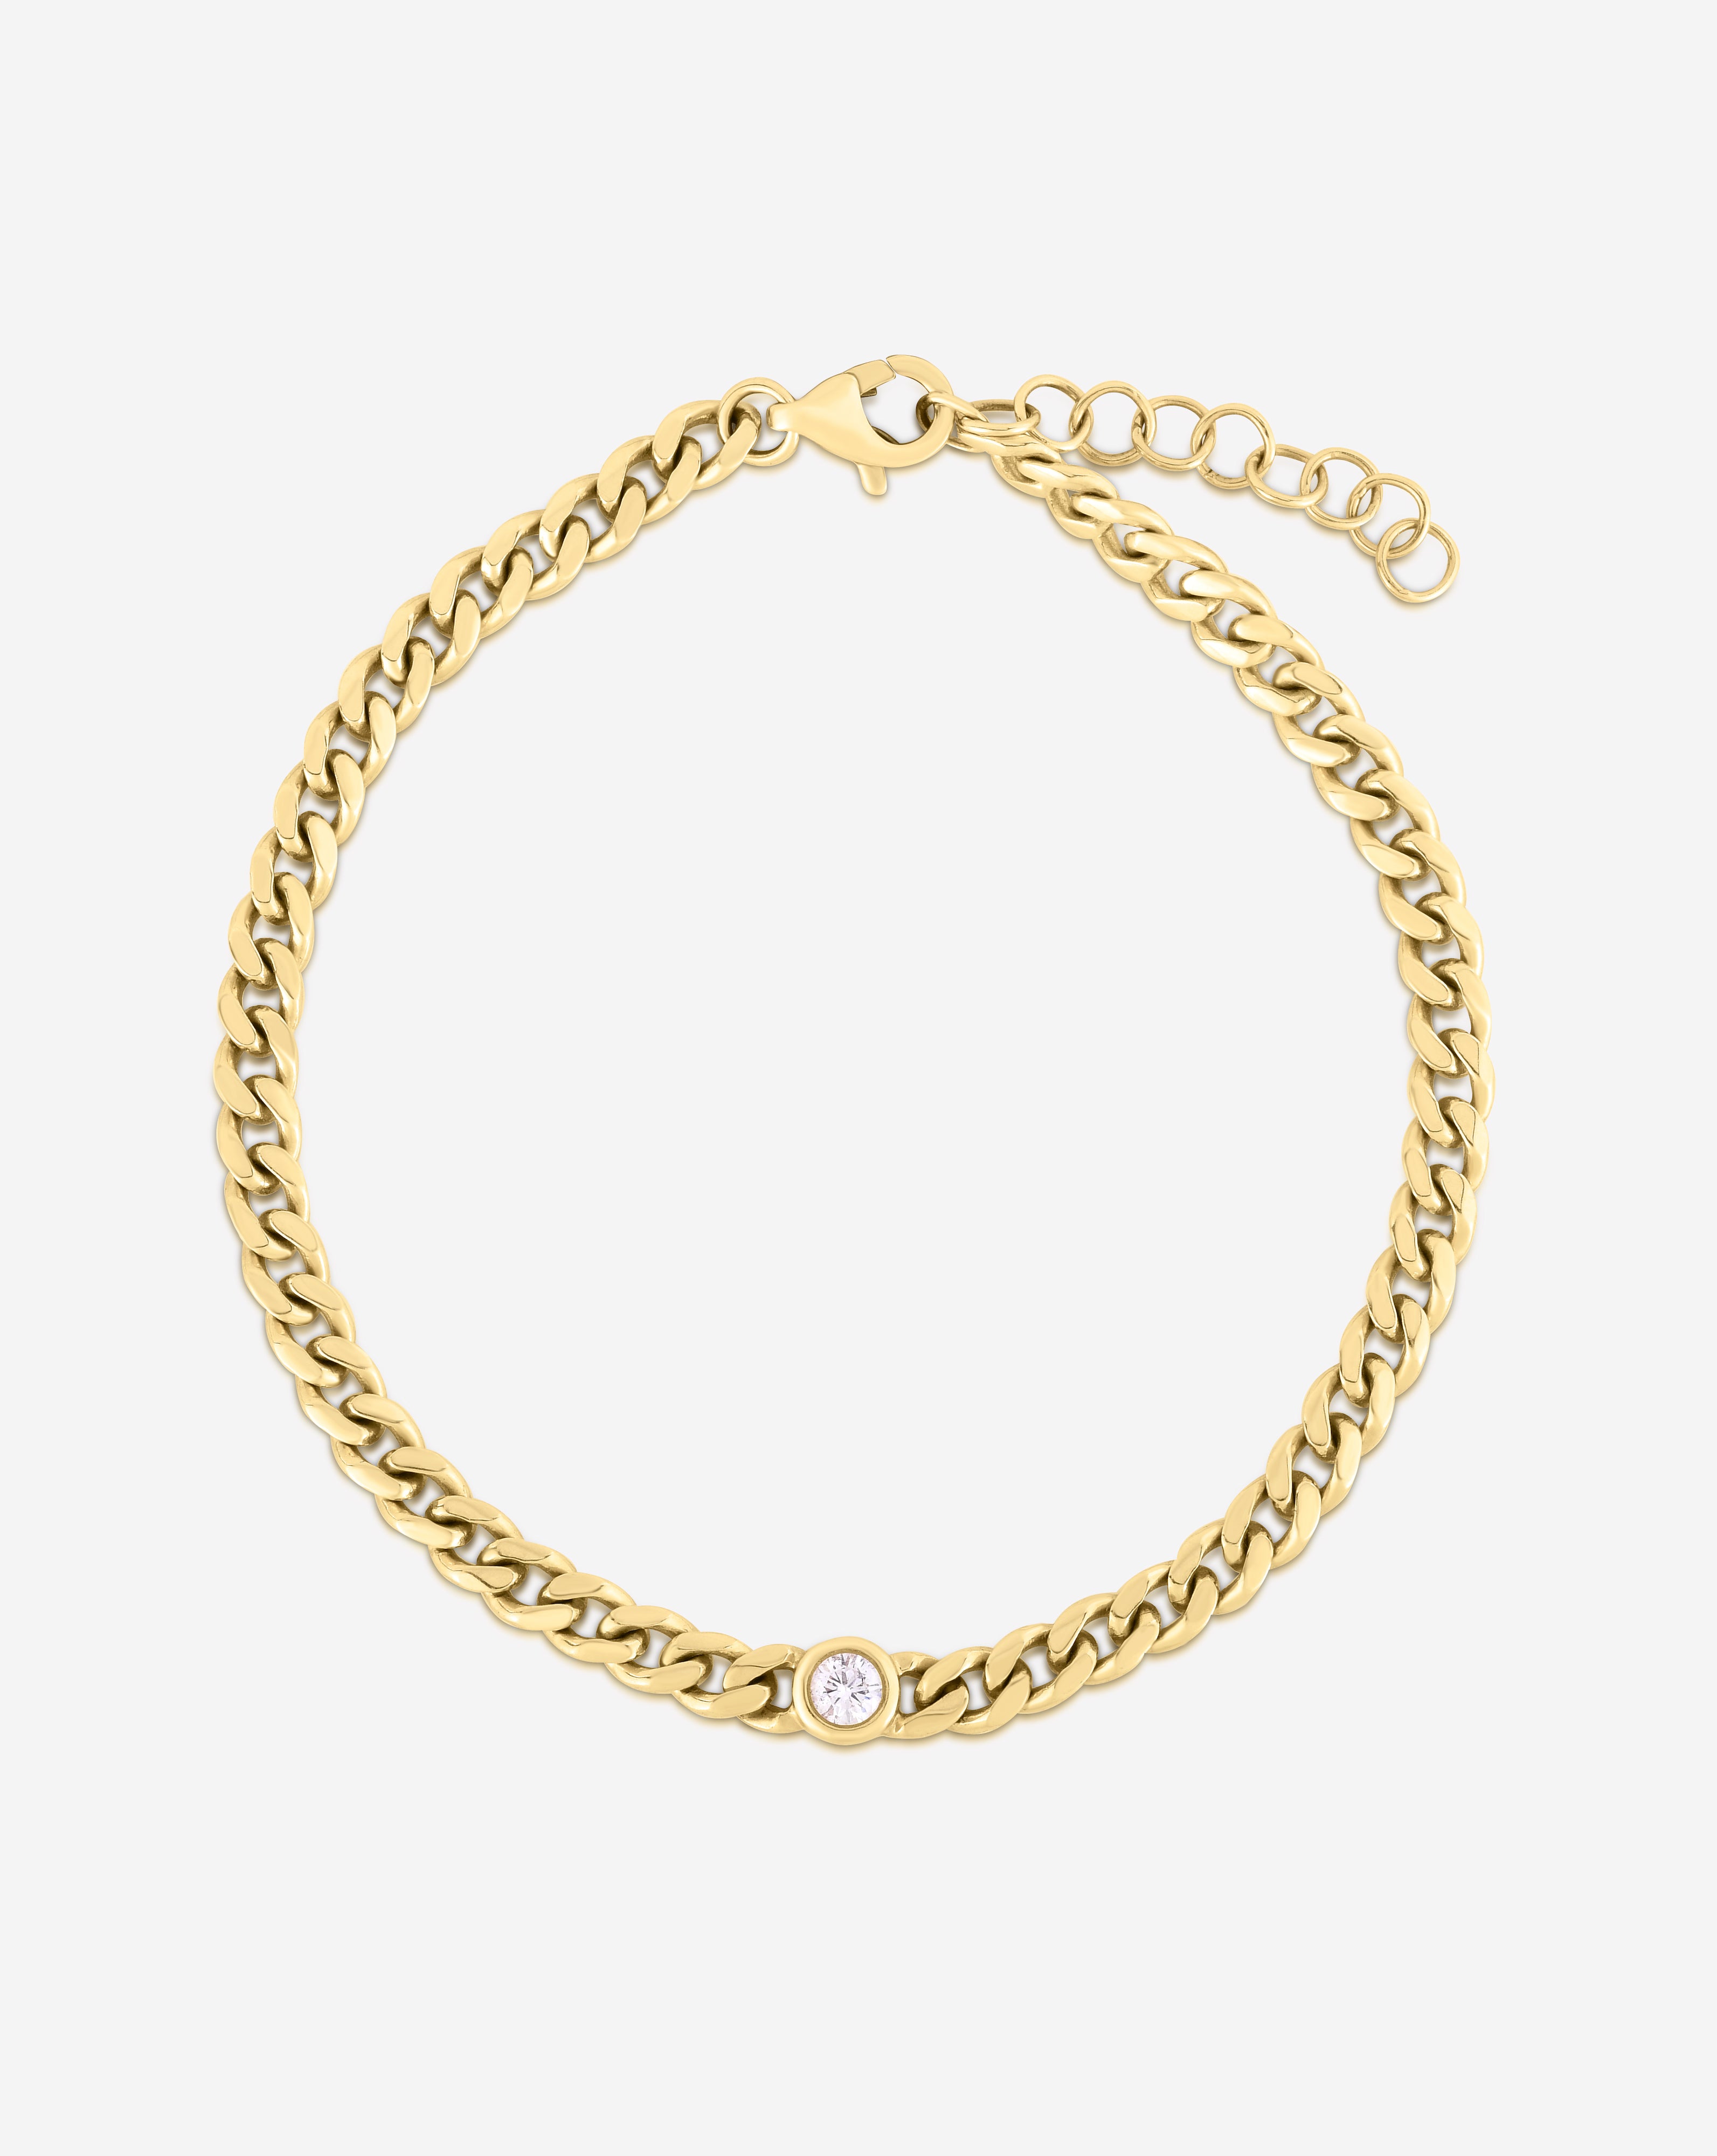 Valentino Chain Bracelet 14K Solid Gold Women Sparkle Mirror Link Bracelet  | eBay